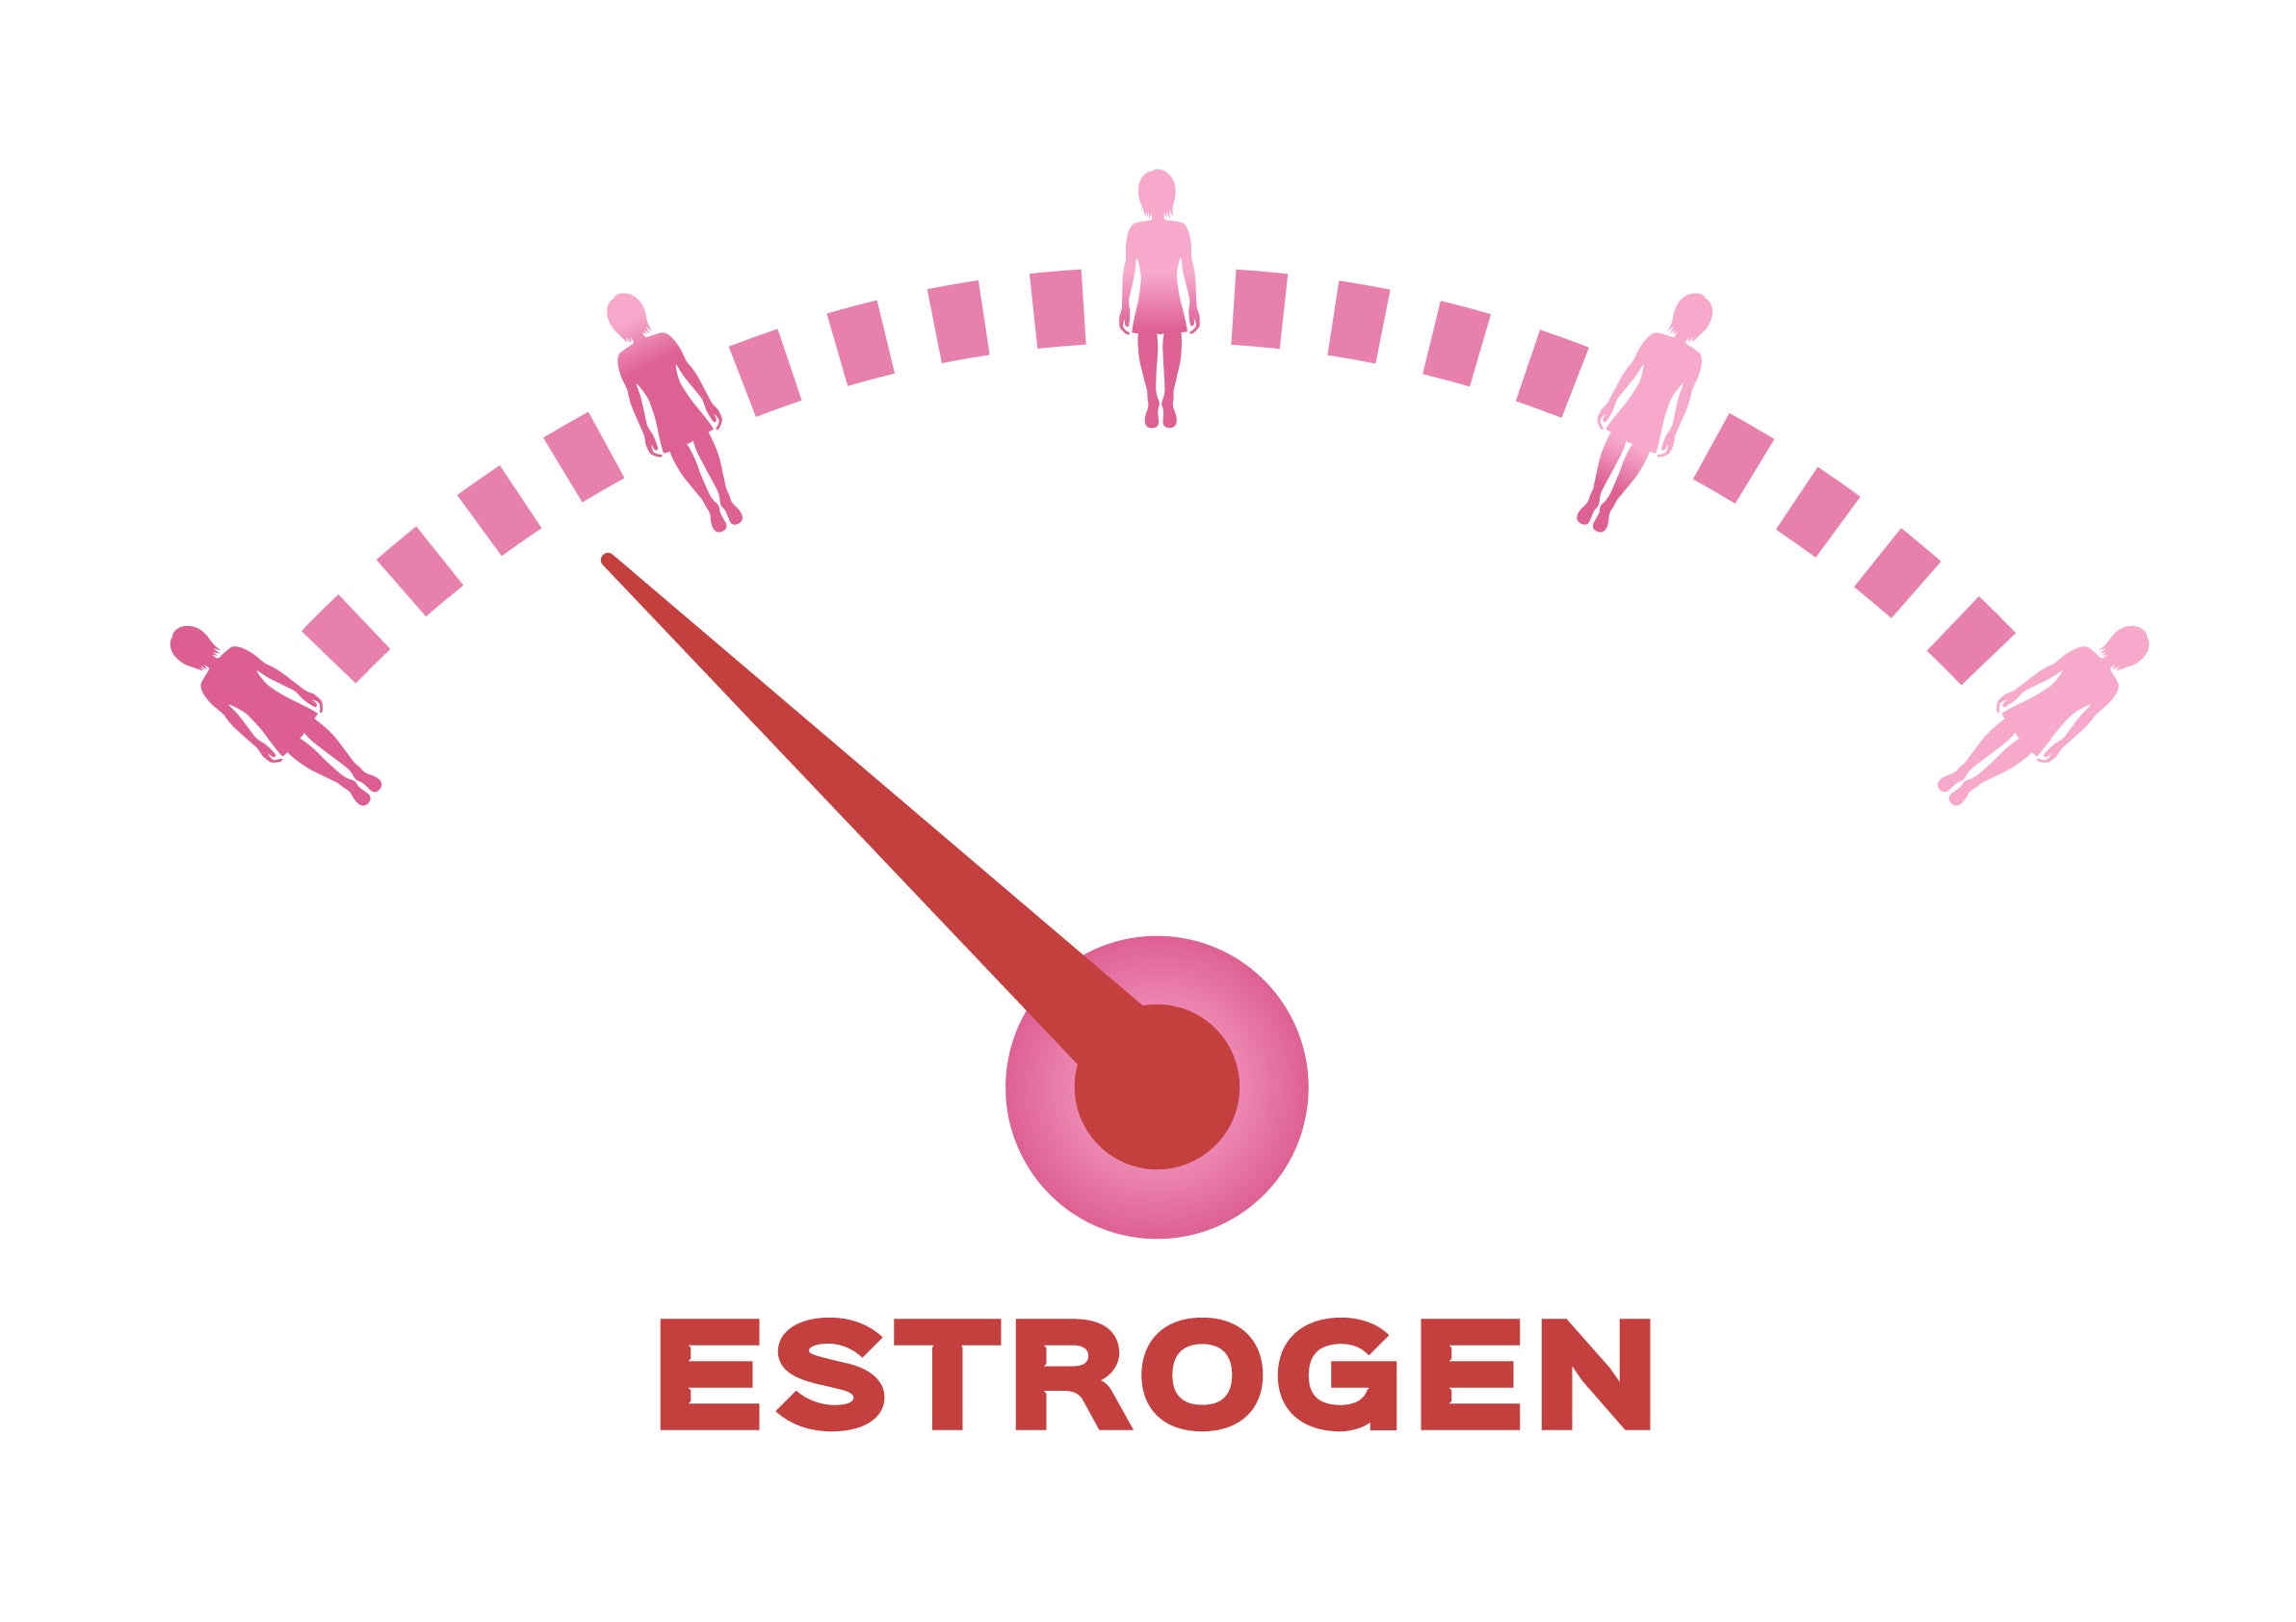 Estradiol slows lipid progression in early menopause